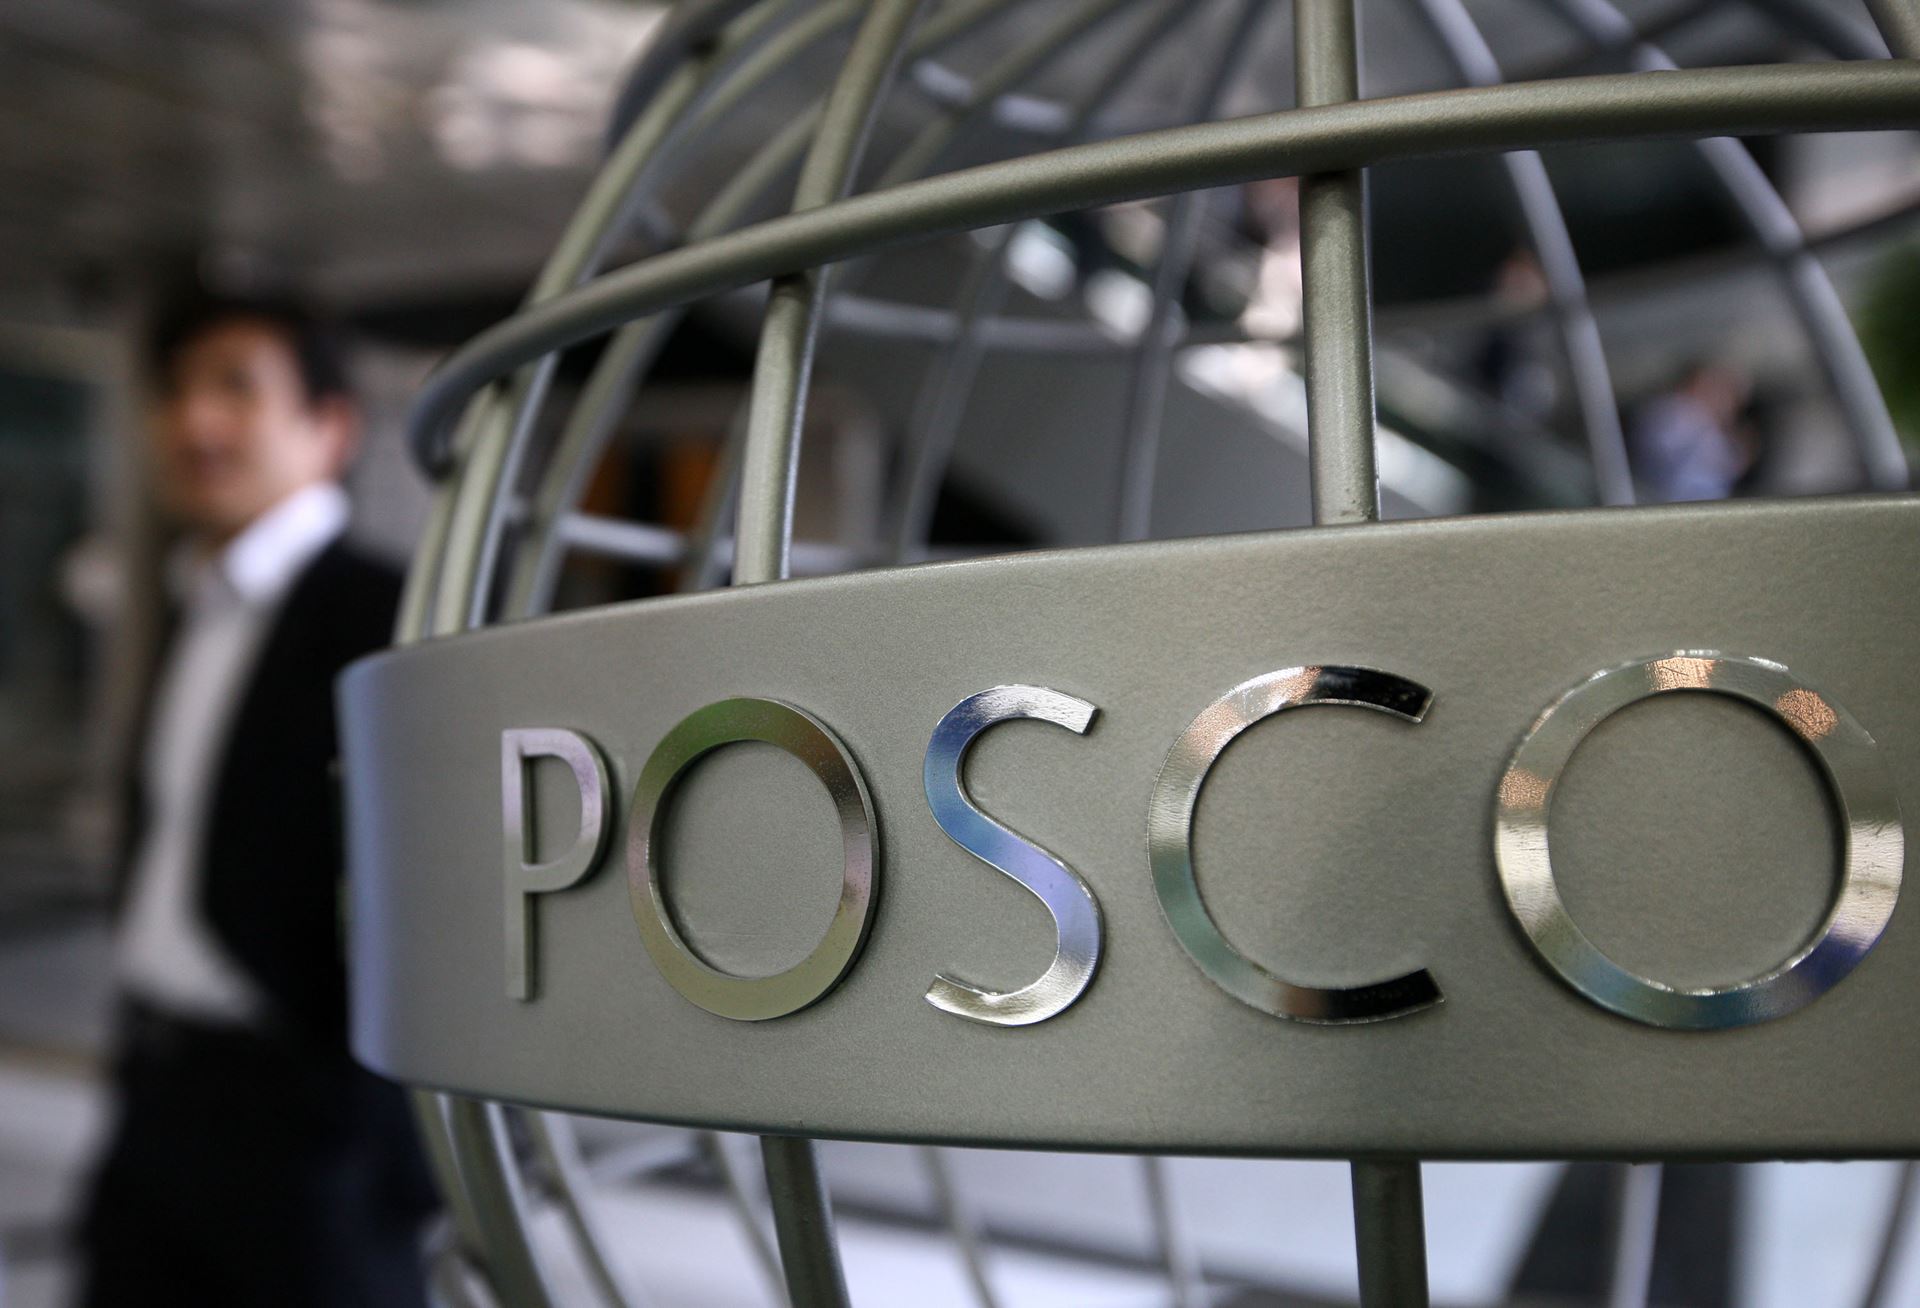 POSCO will support Ukraine's reconstruction efforts